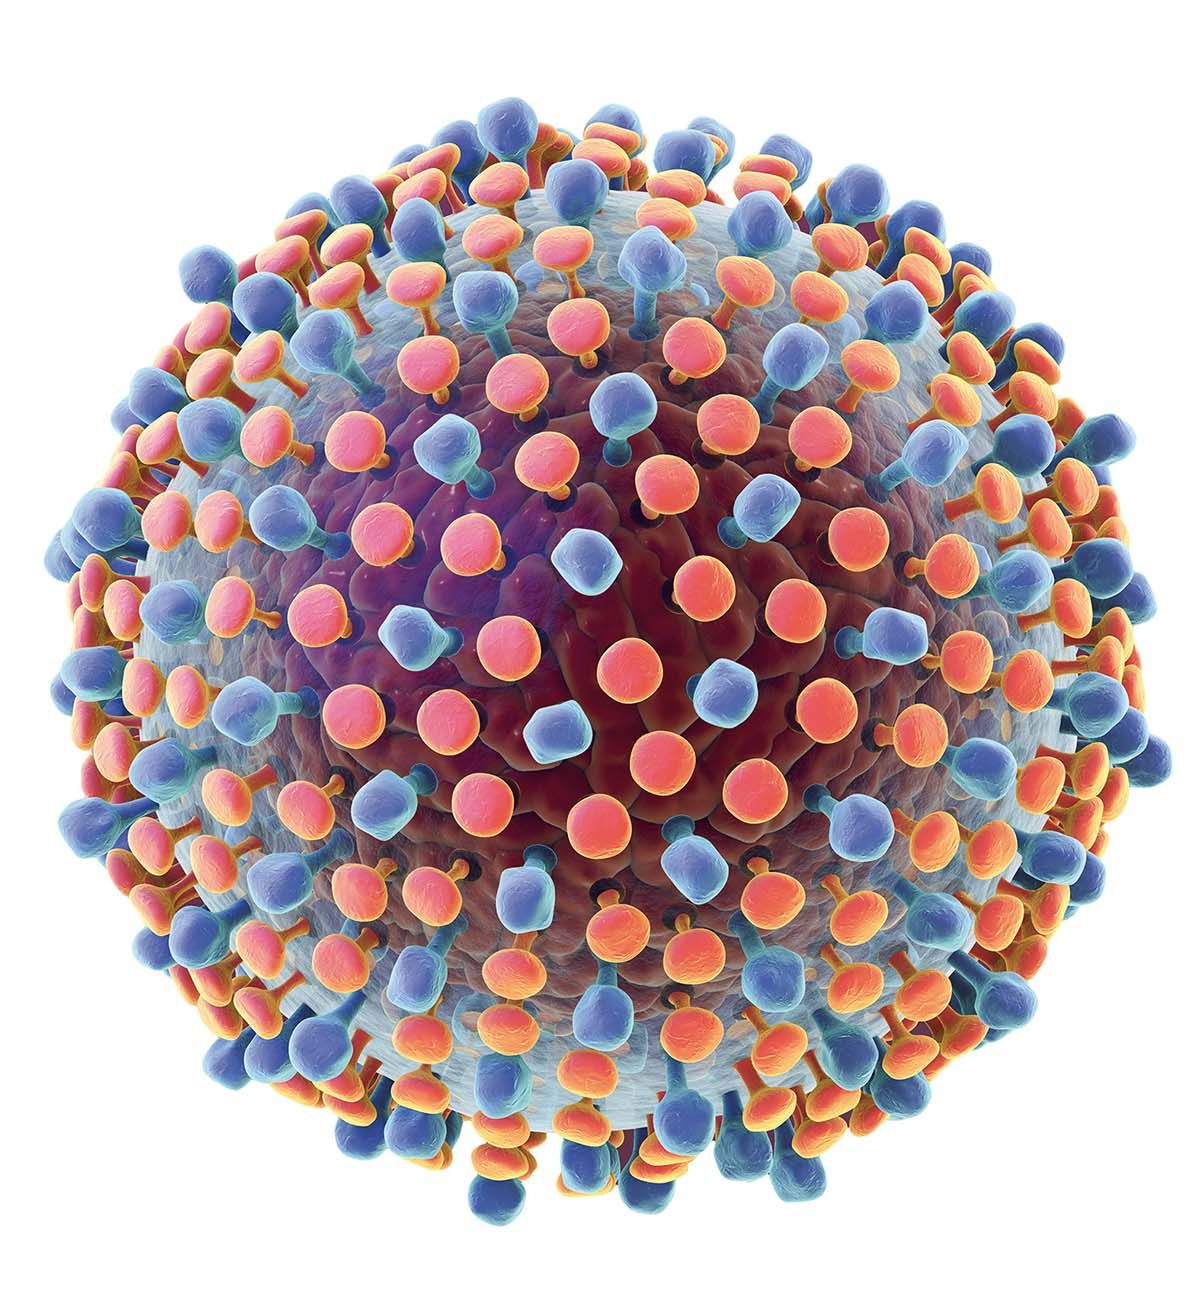 virusul hepatitei C